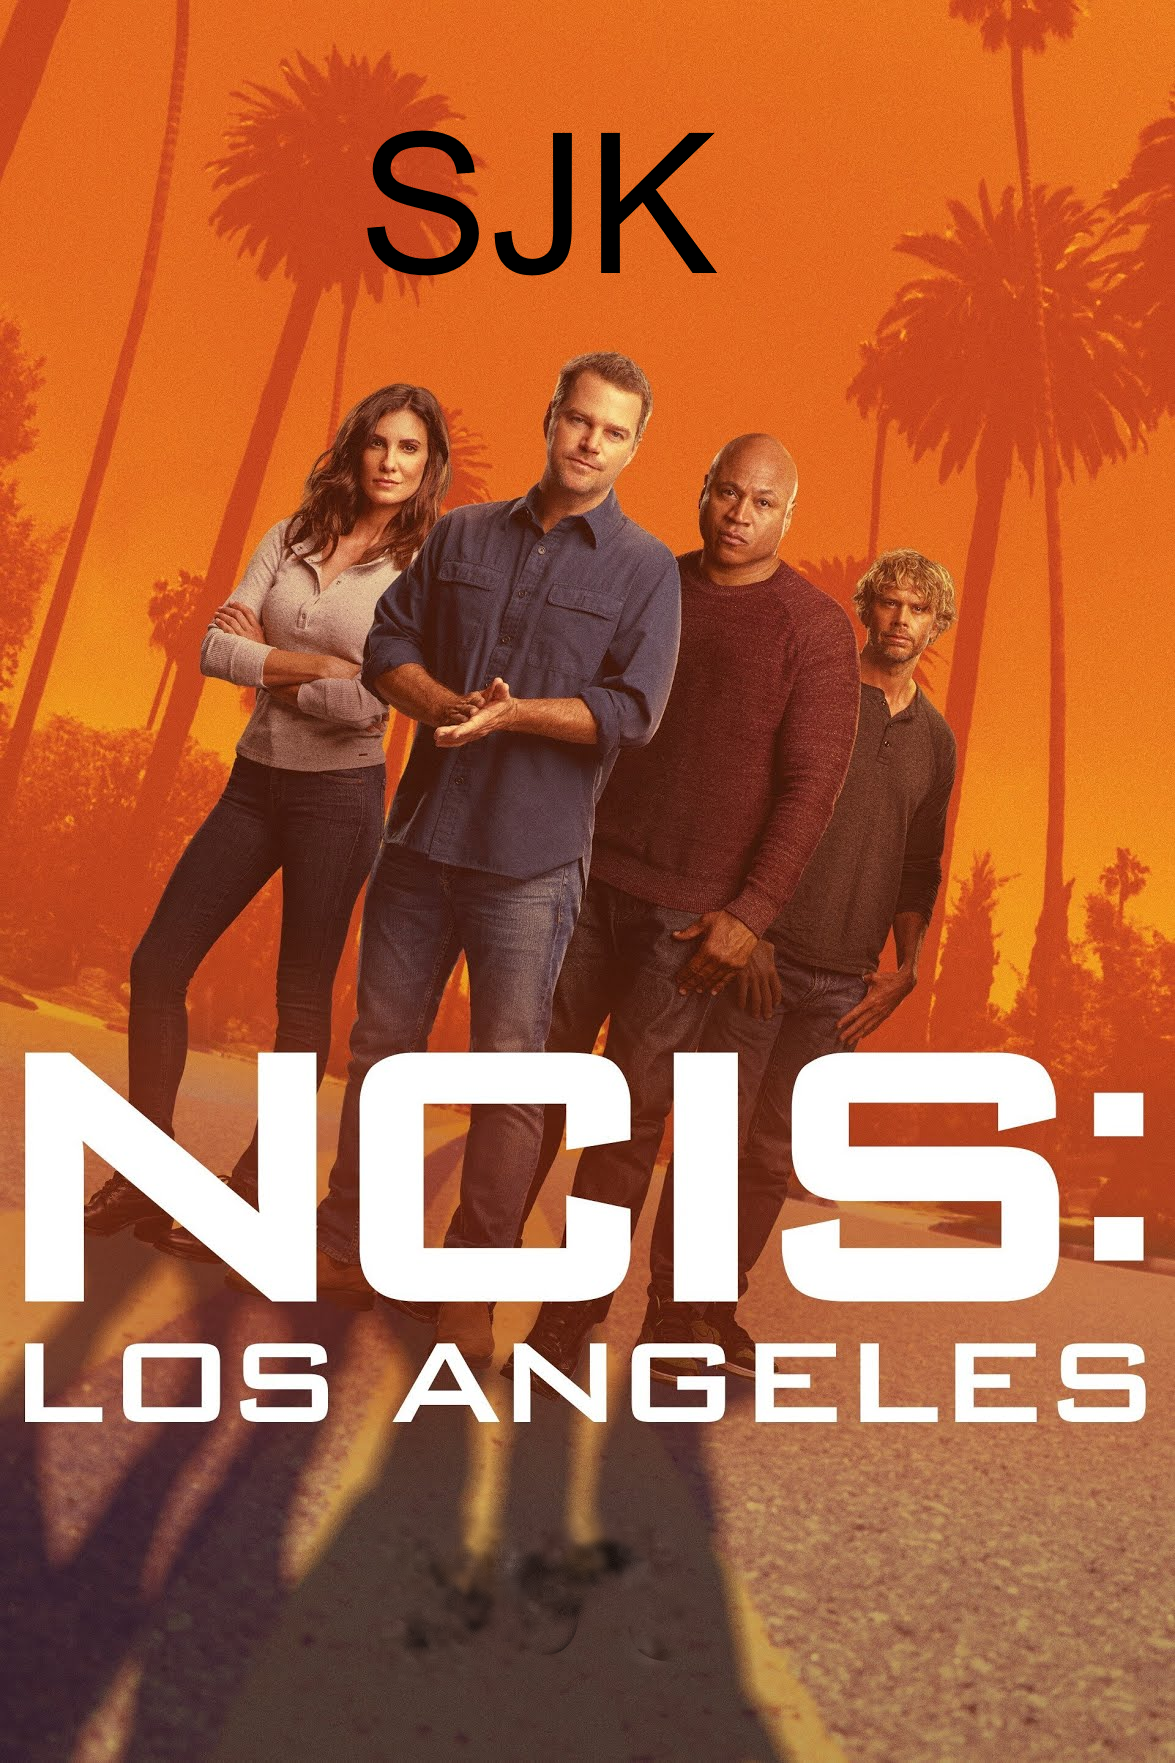 NCIS Los Angeles S04 Compleet NLSubs-S-J-K.nzb